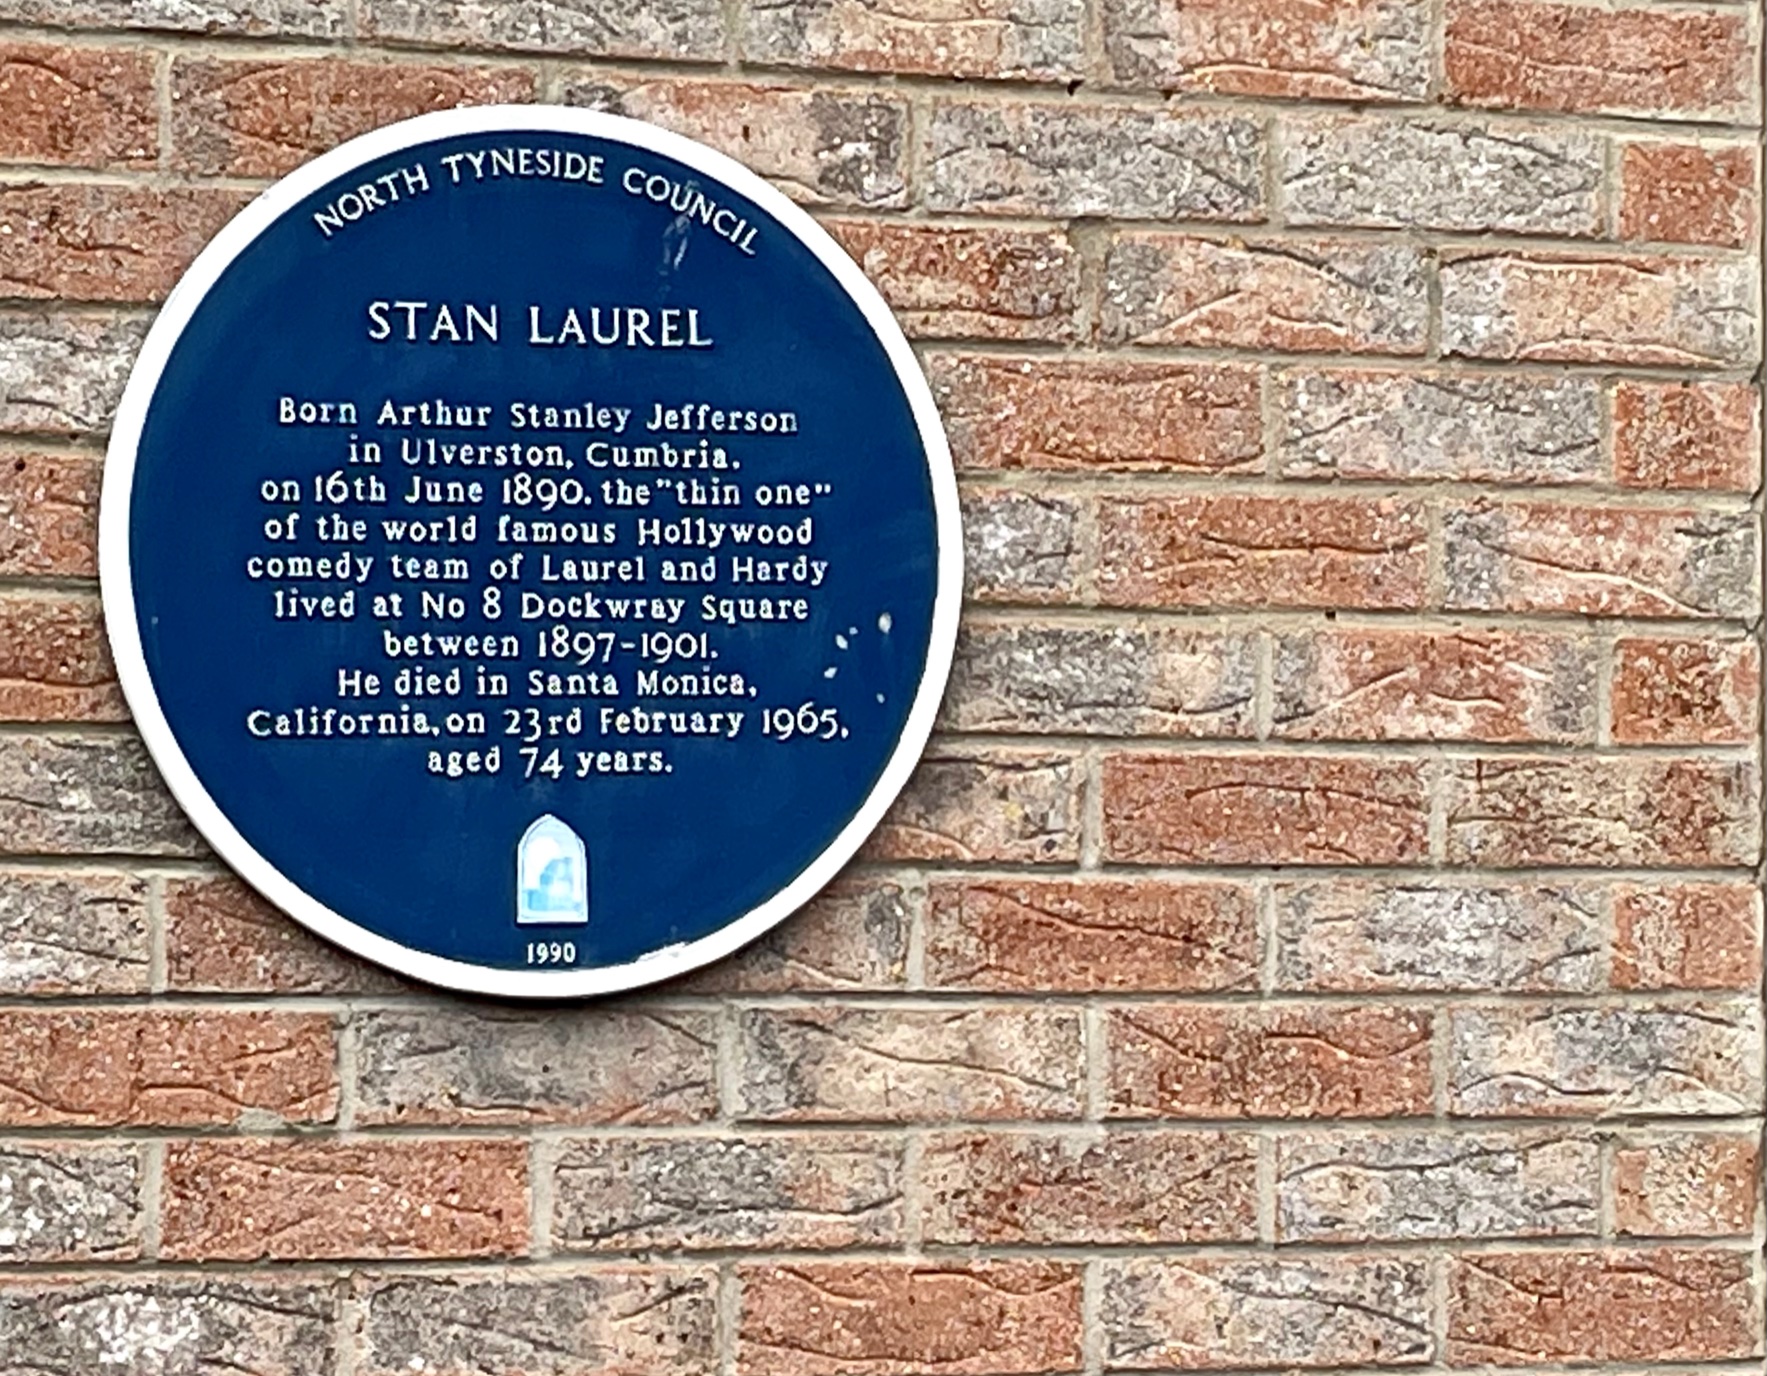 Dockwray Square, North Shields - Stan Laurel plaque